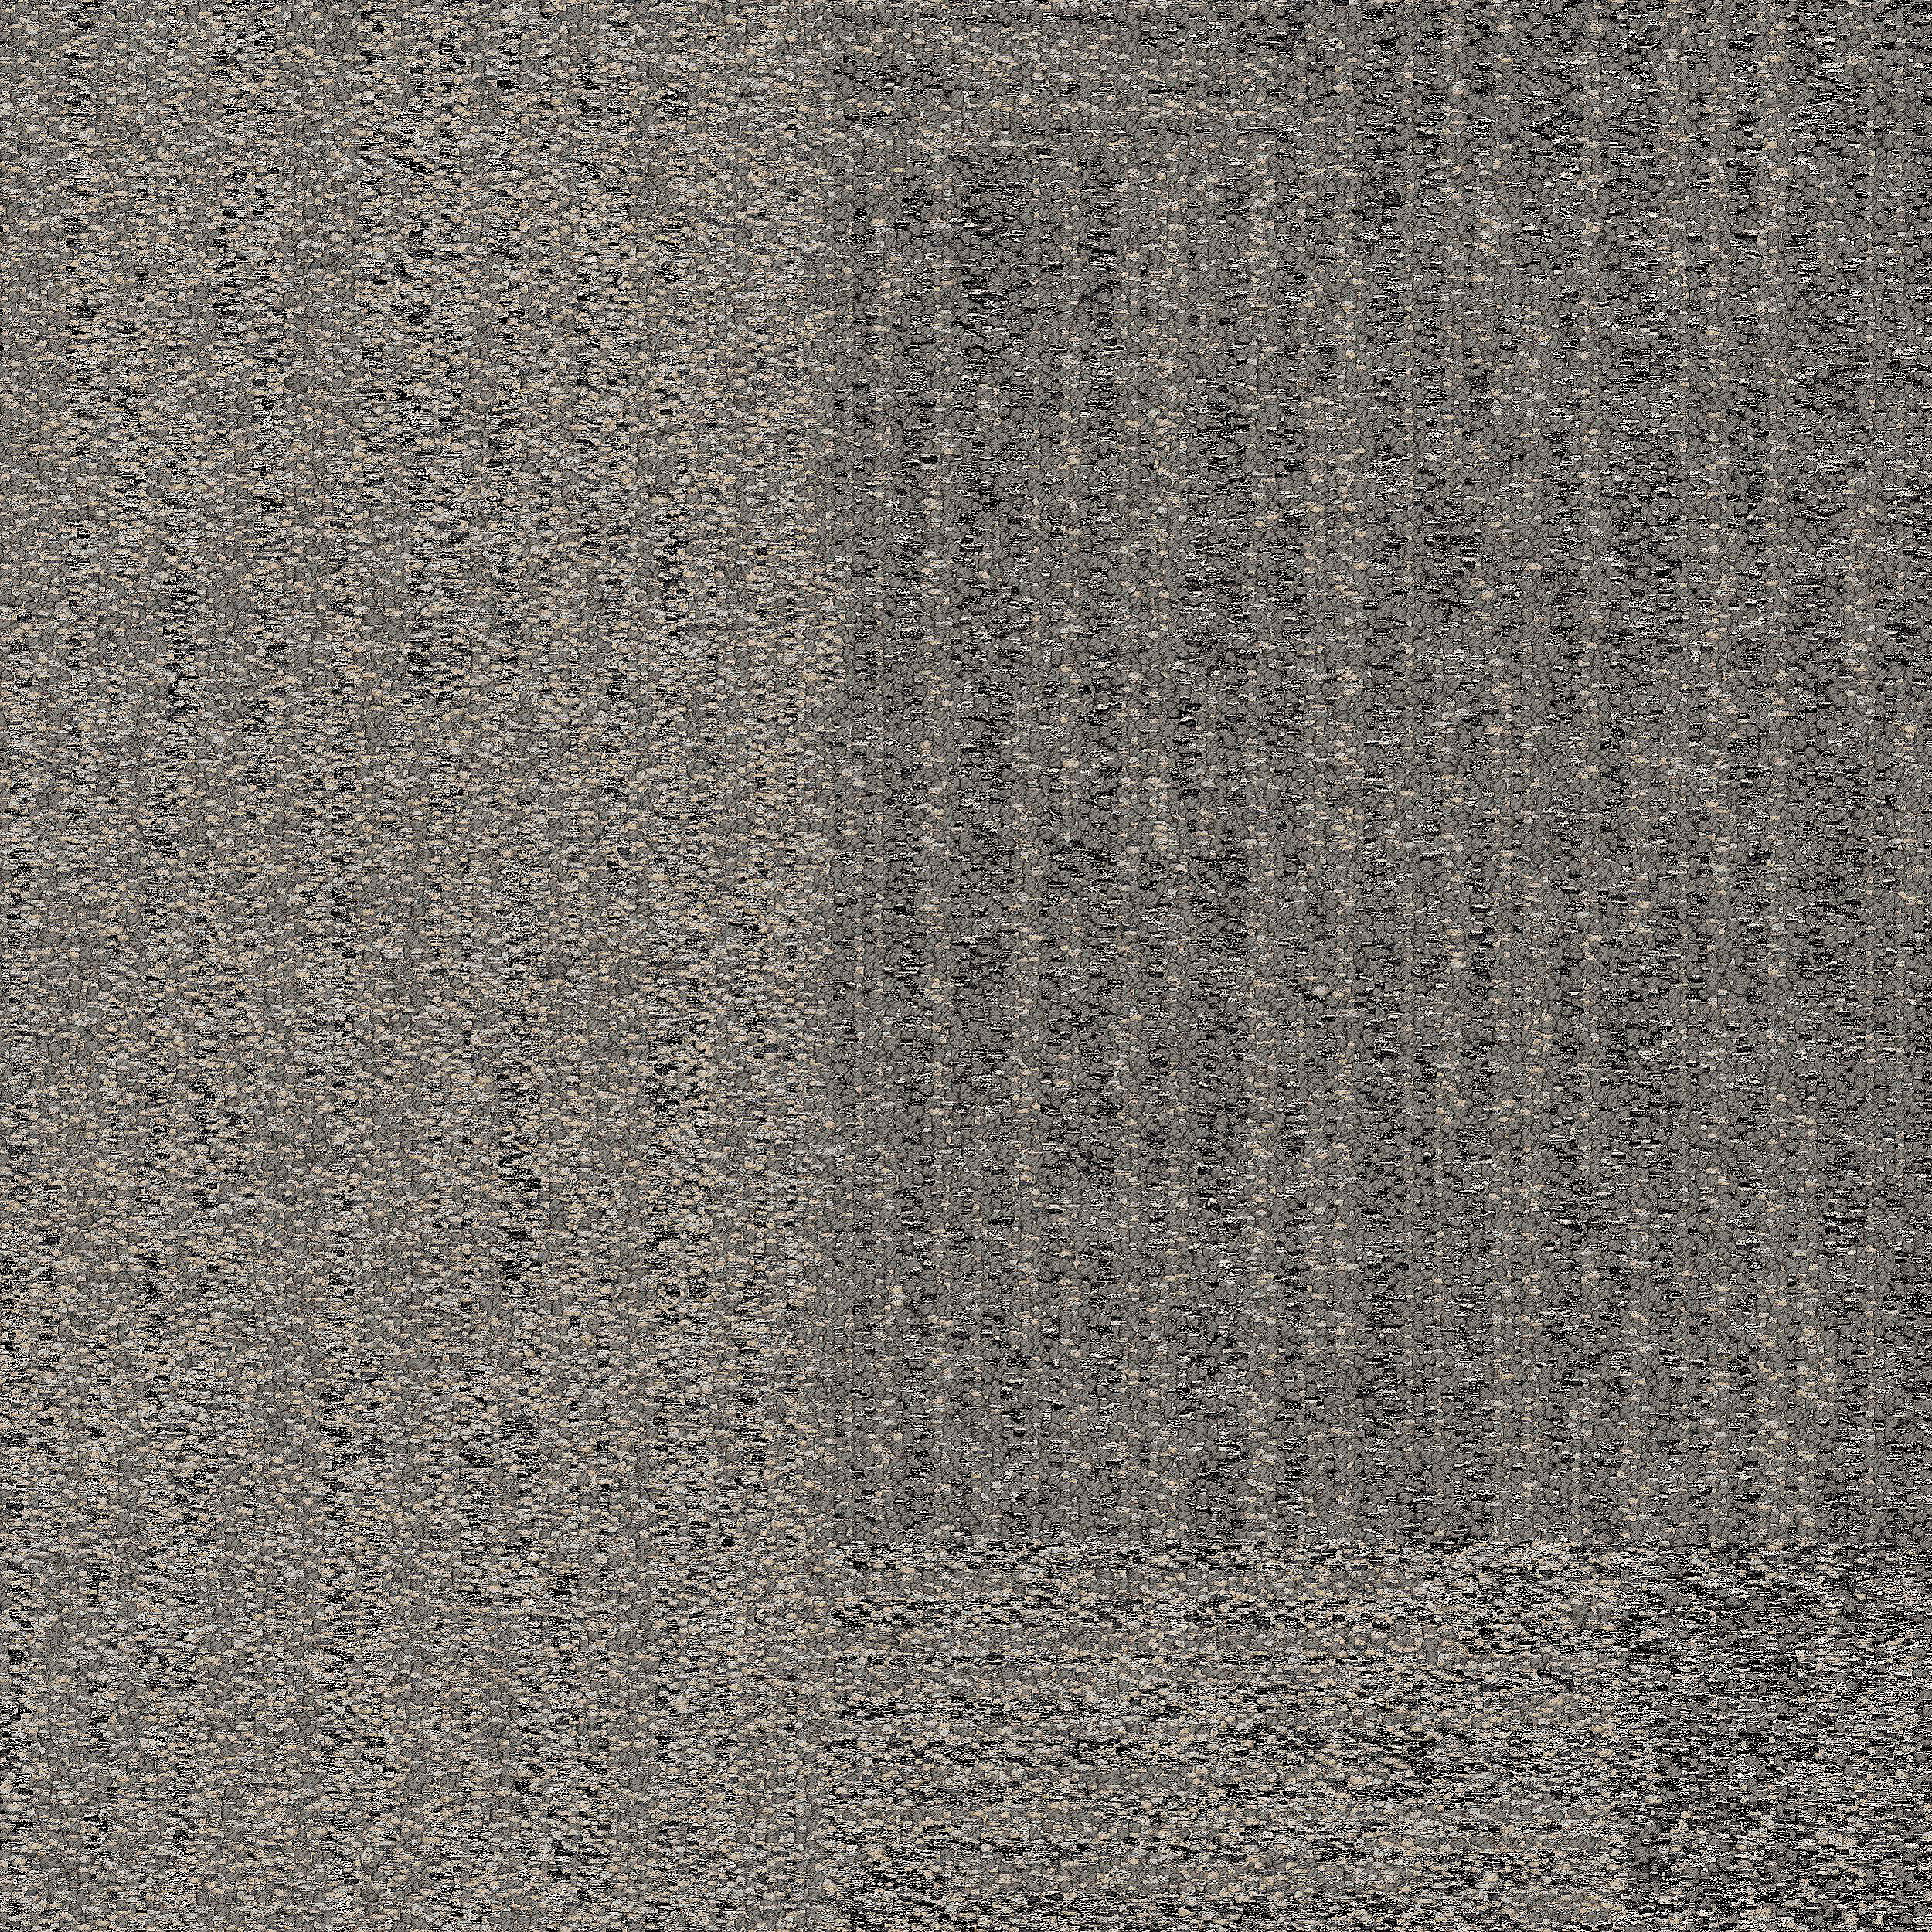 Cambria Carpet Tile In Mist image number 5